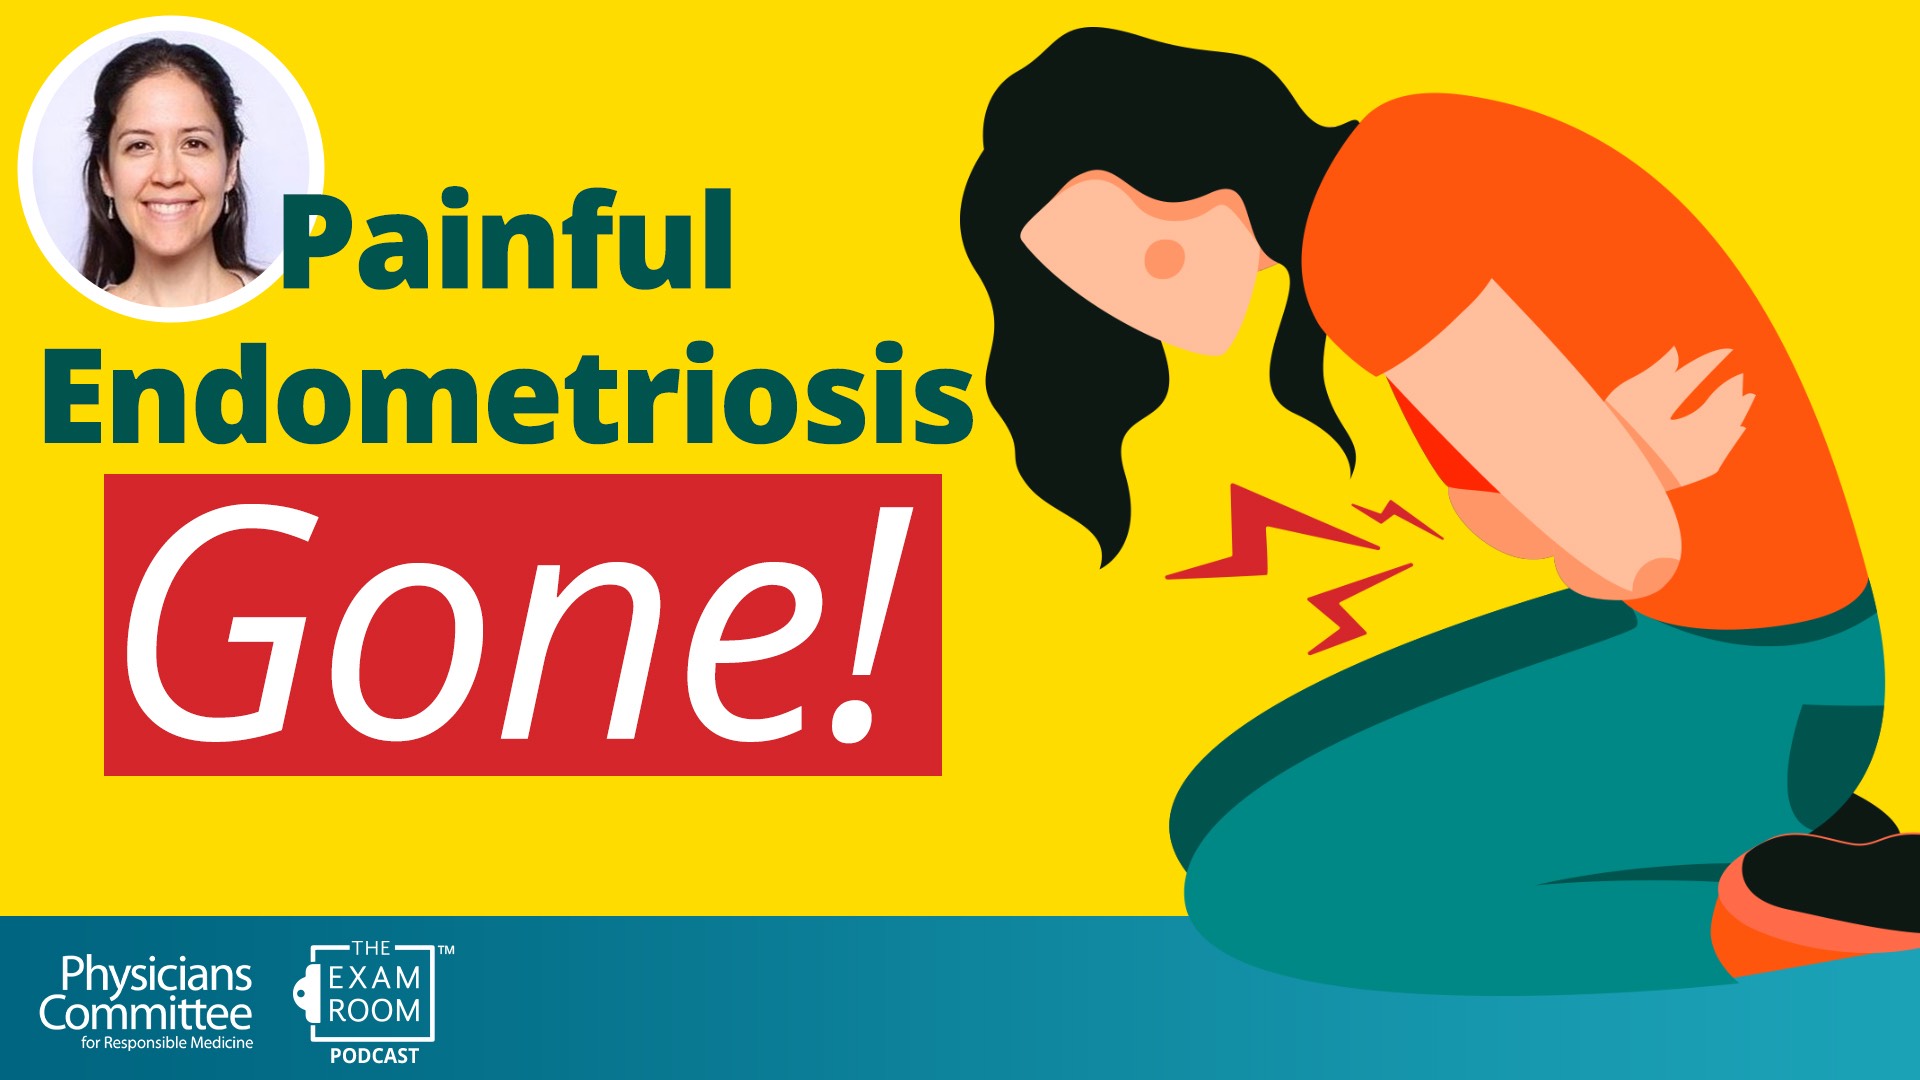 5-Star Health Success! She Reversed Painful Endometriosis | Lianna Levine Reisner